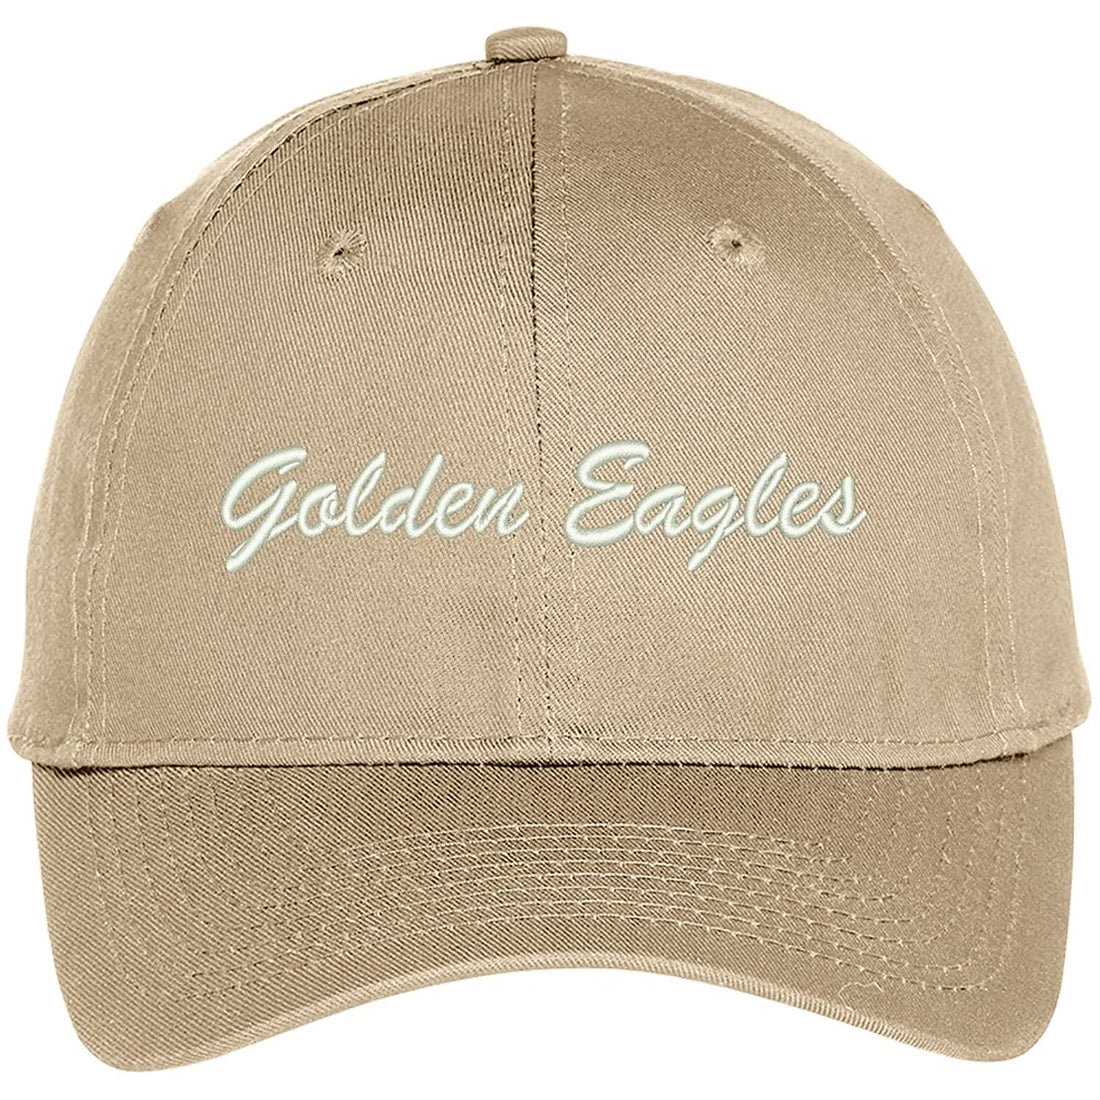 Trendy Apparel Shop Golden Eagles Embroidered Team Nickname Mascot Cap - Khaki